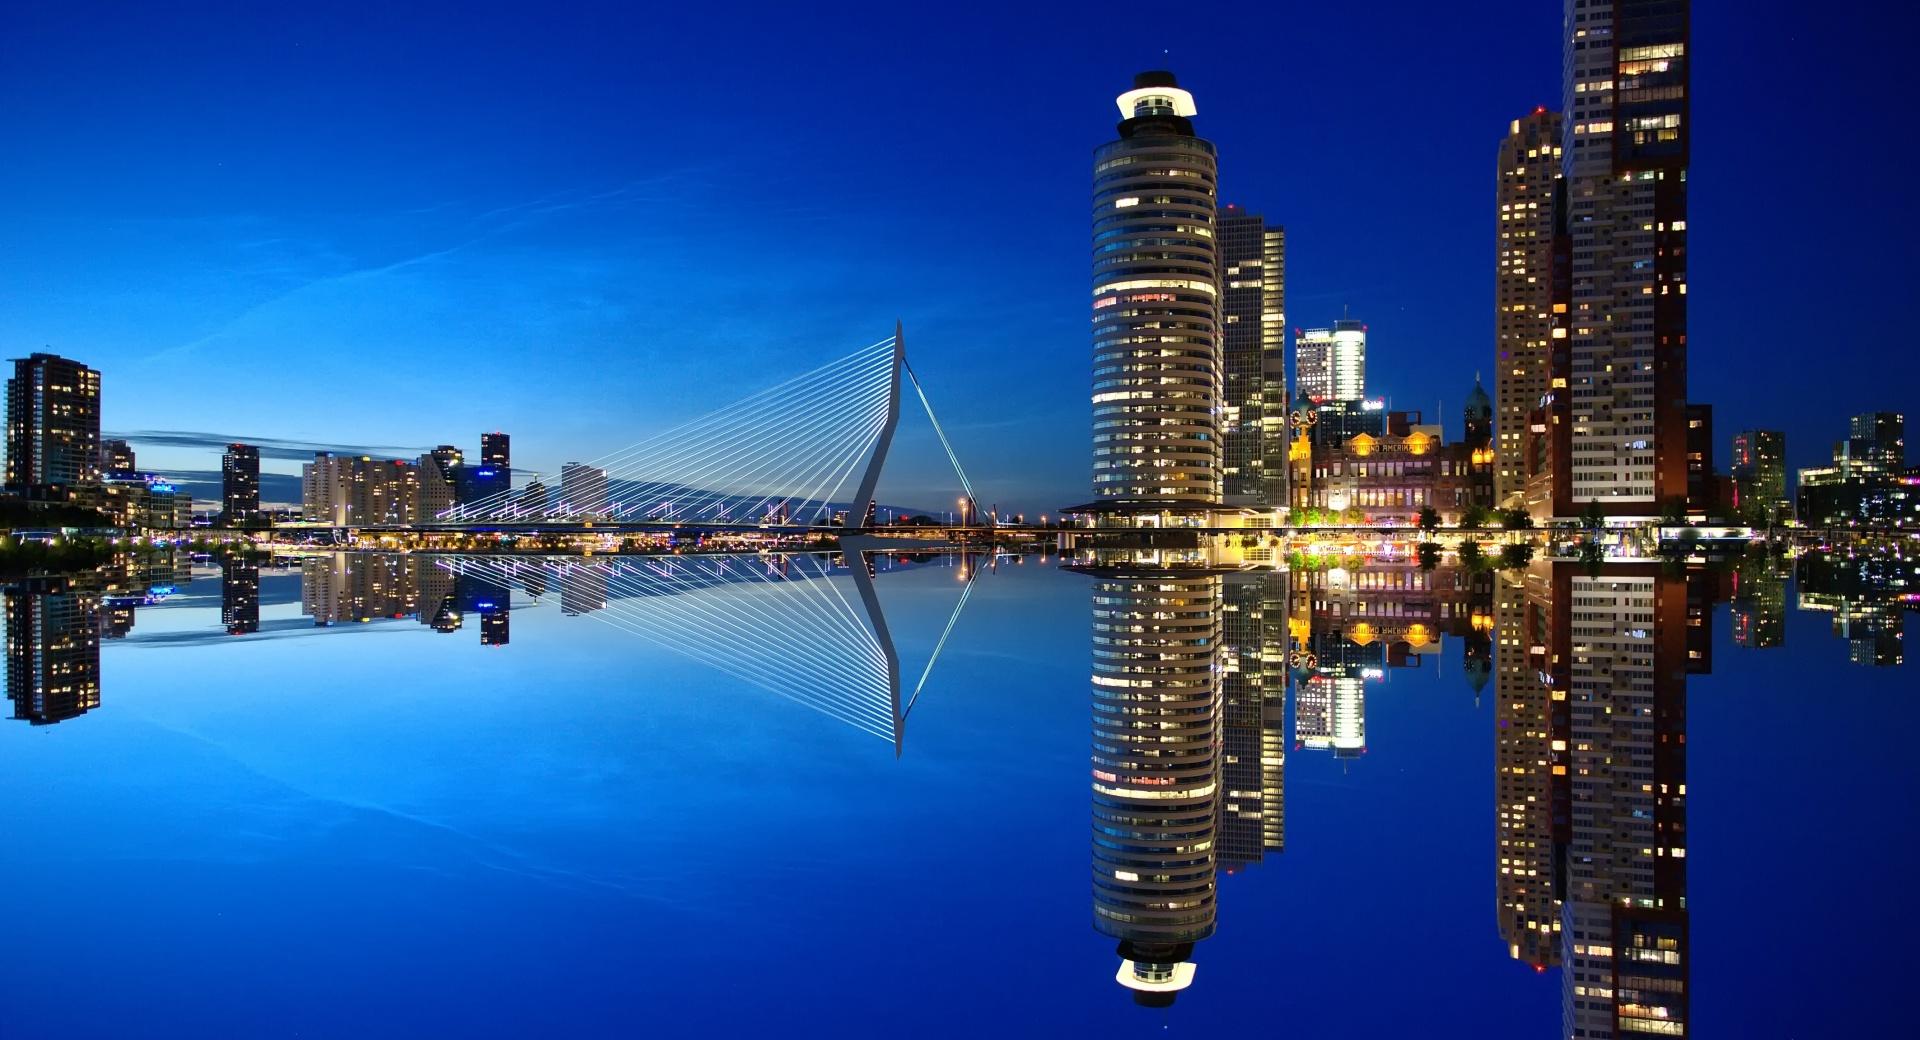 Rotterdam Skyline Night at 1024 x 1024 iPad size wallpapers HD quality